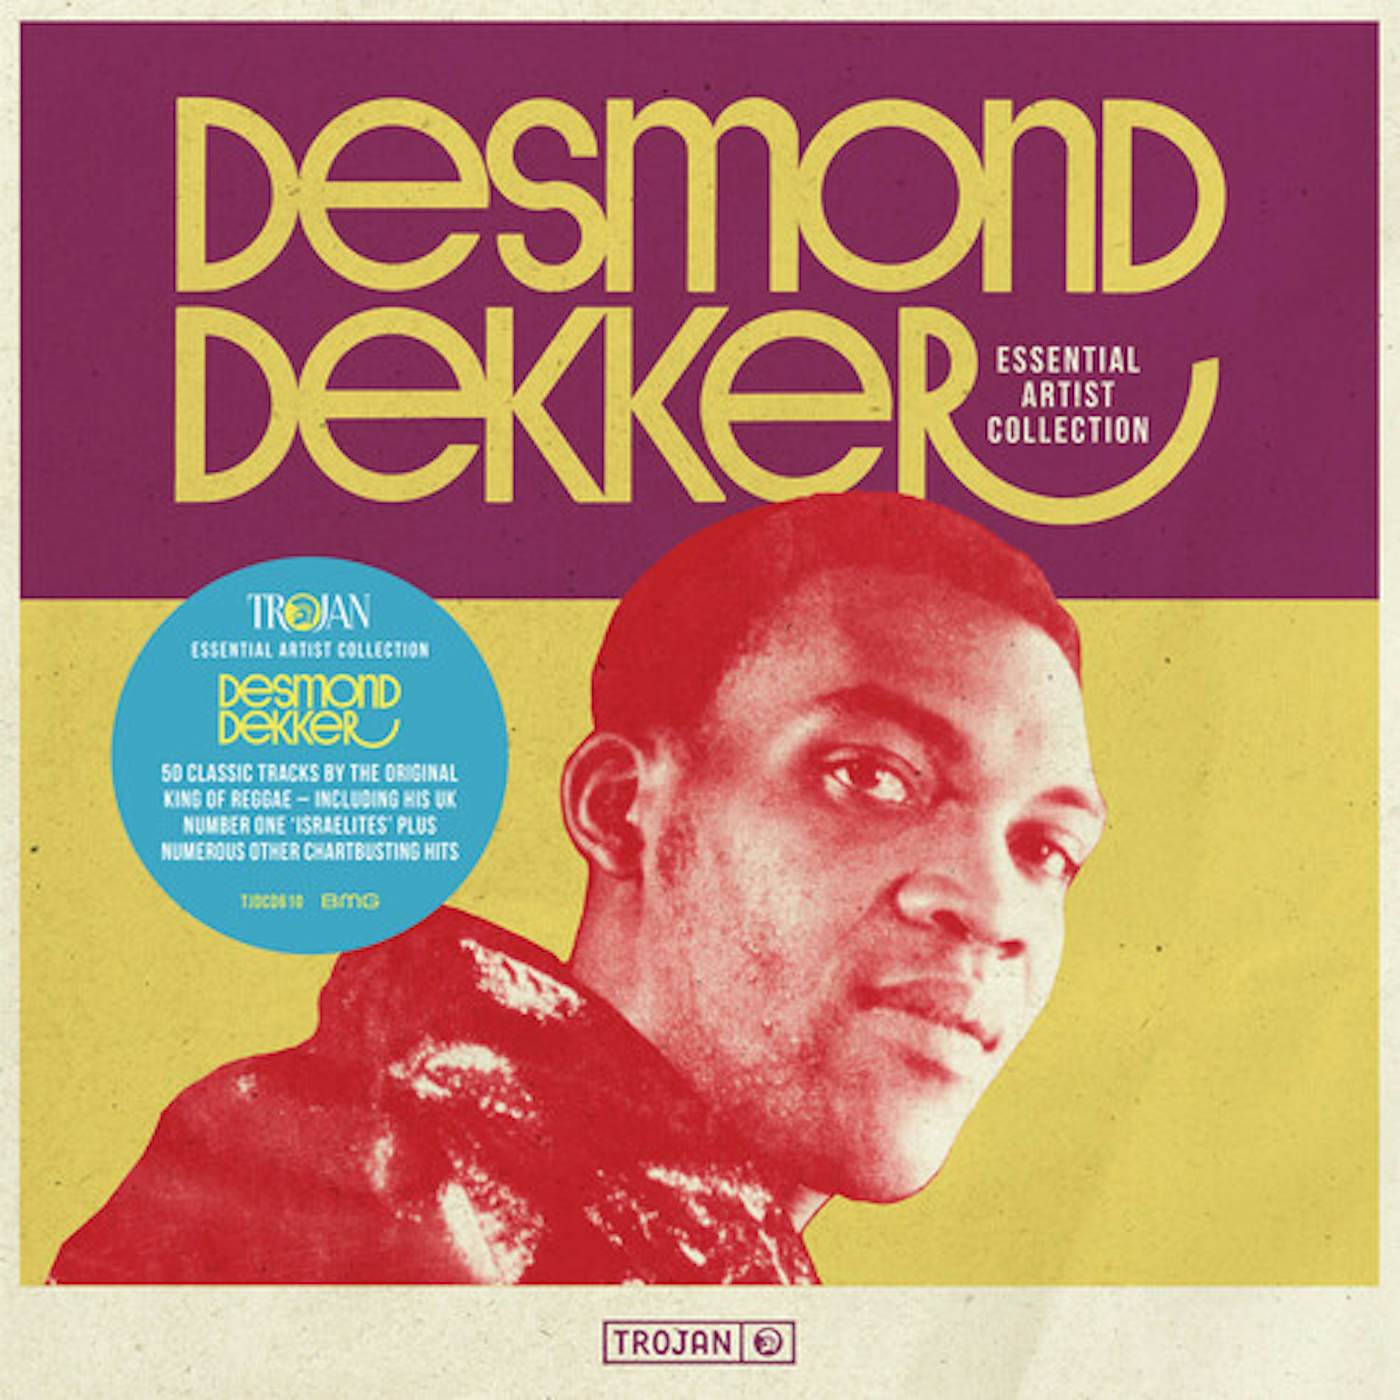 ESSENTIAL ARTIST COLLECTION - DESMOND DEKKER CD